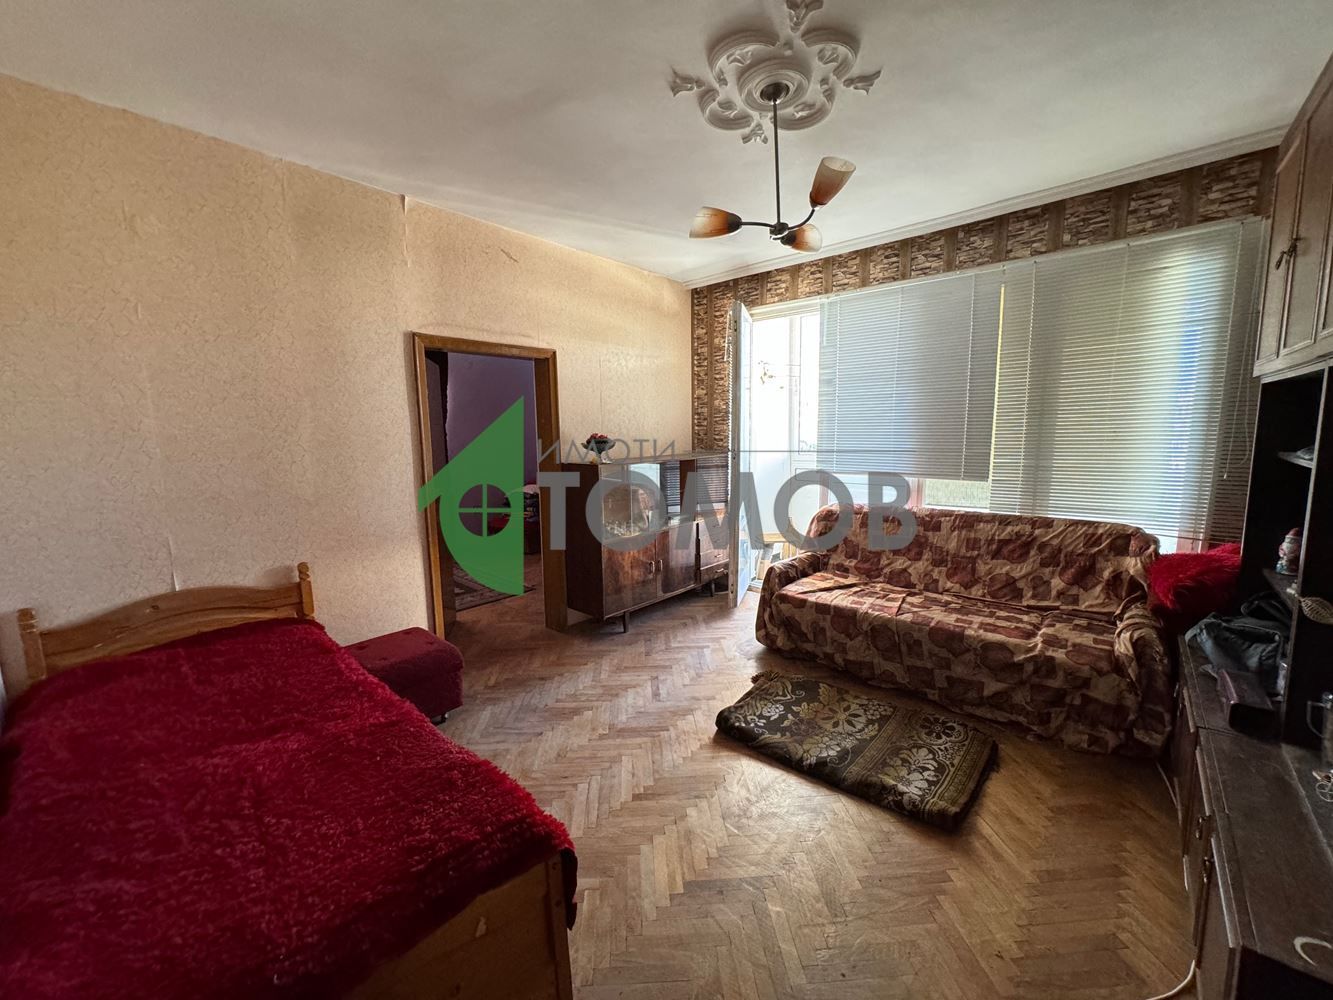 Слънчев тристаен апартамент в центъра на град Стара Загора